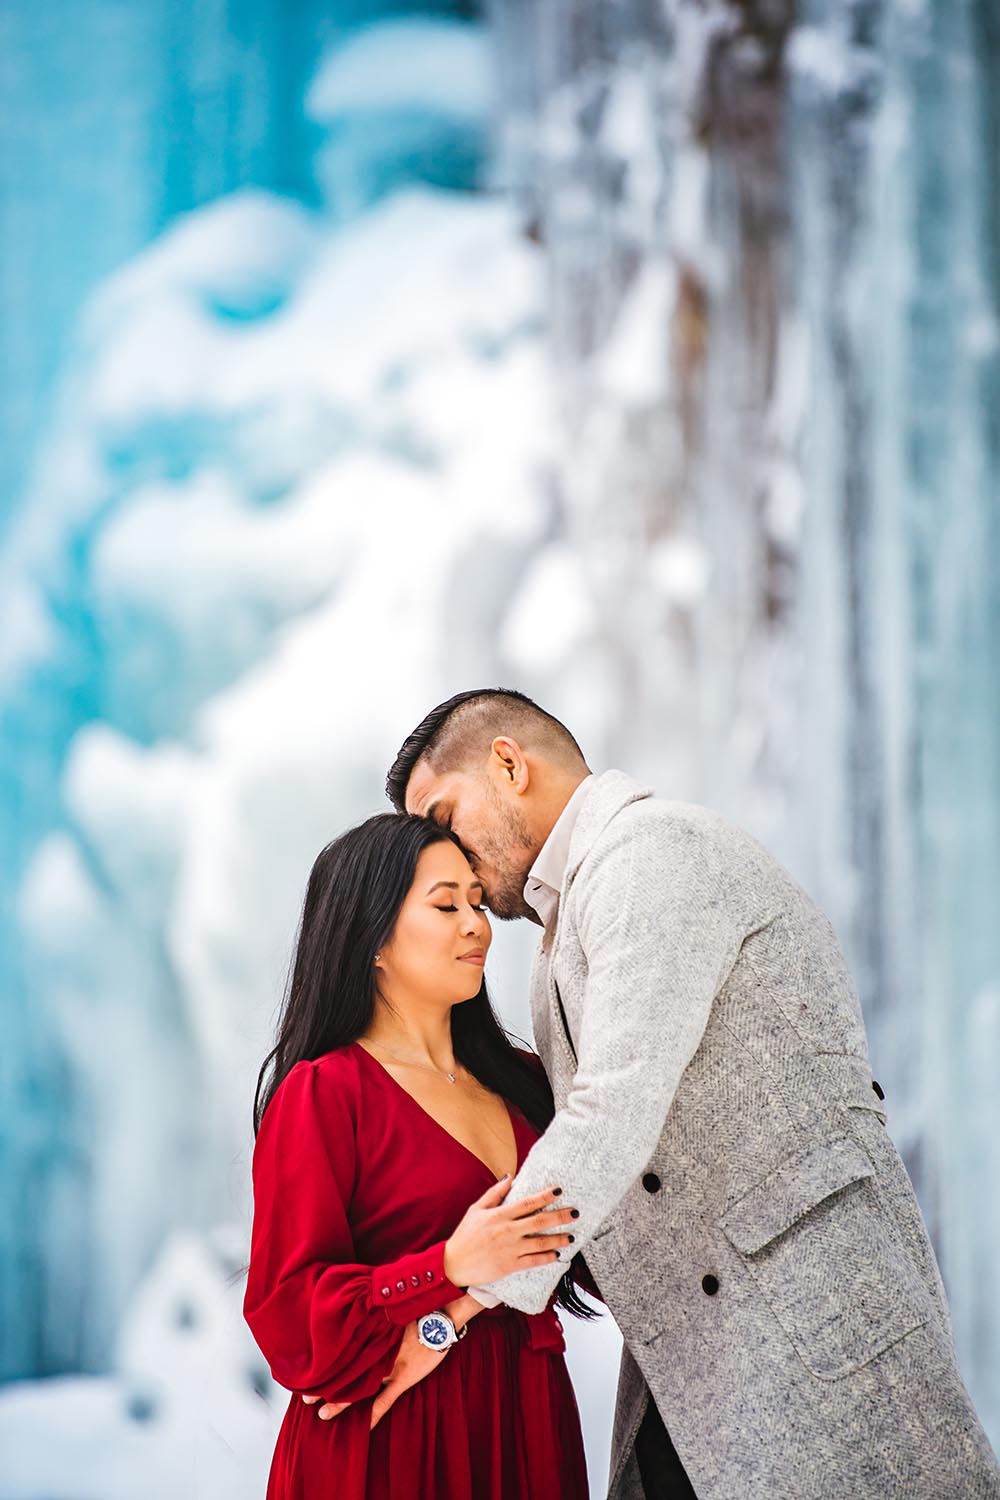 Frozen waterfall adventure elopement